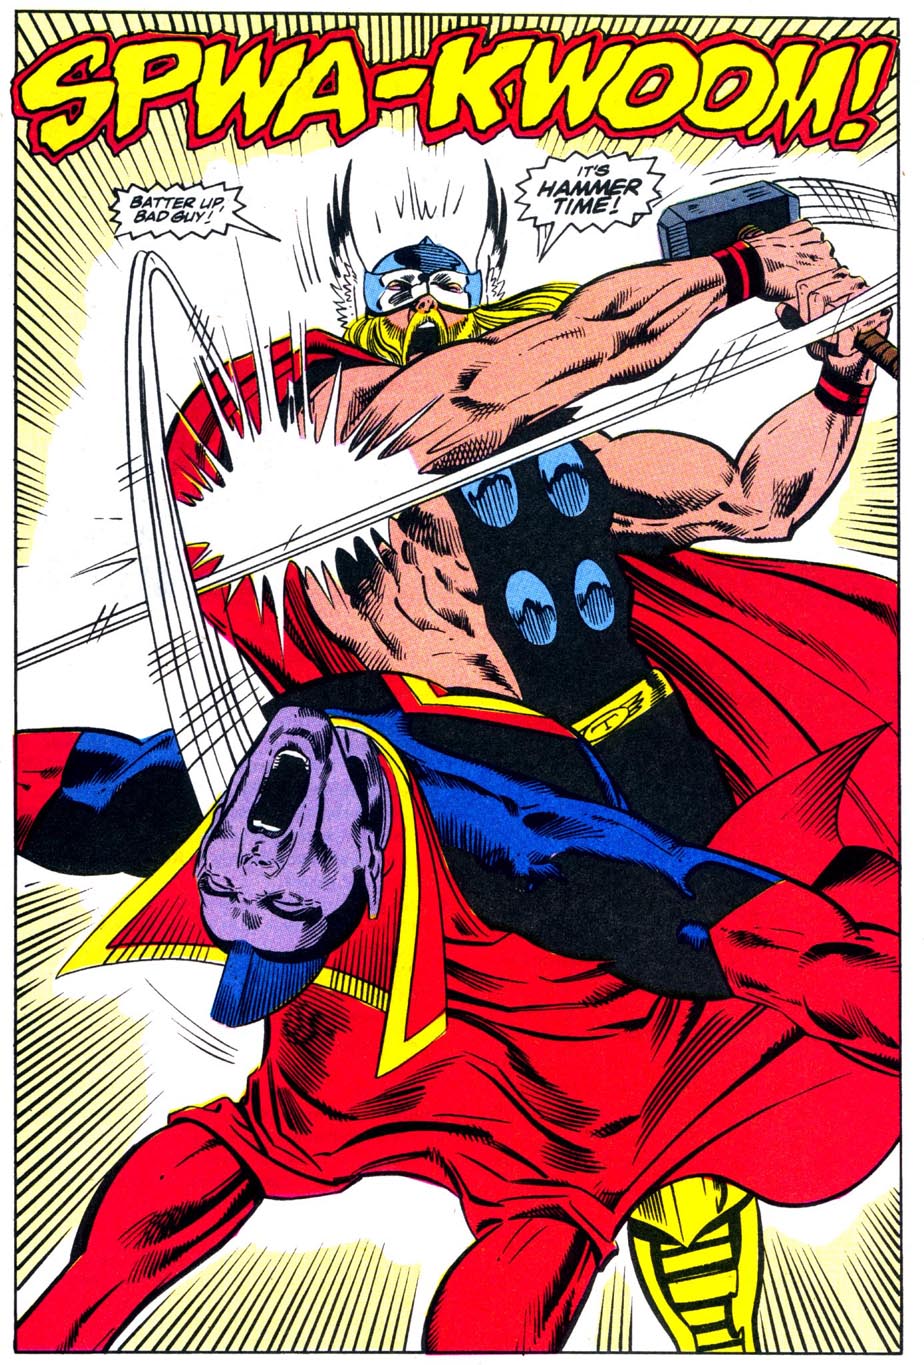 Thor (Eric Masterson) vs. Gladiator